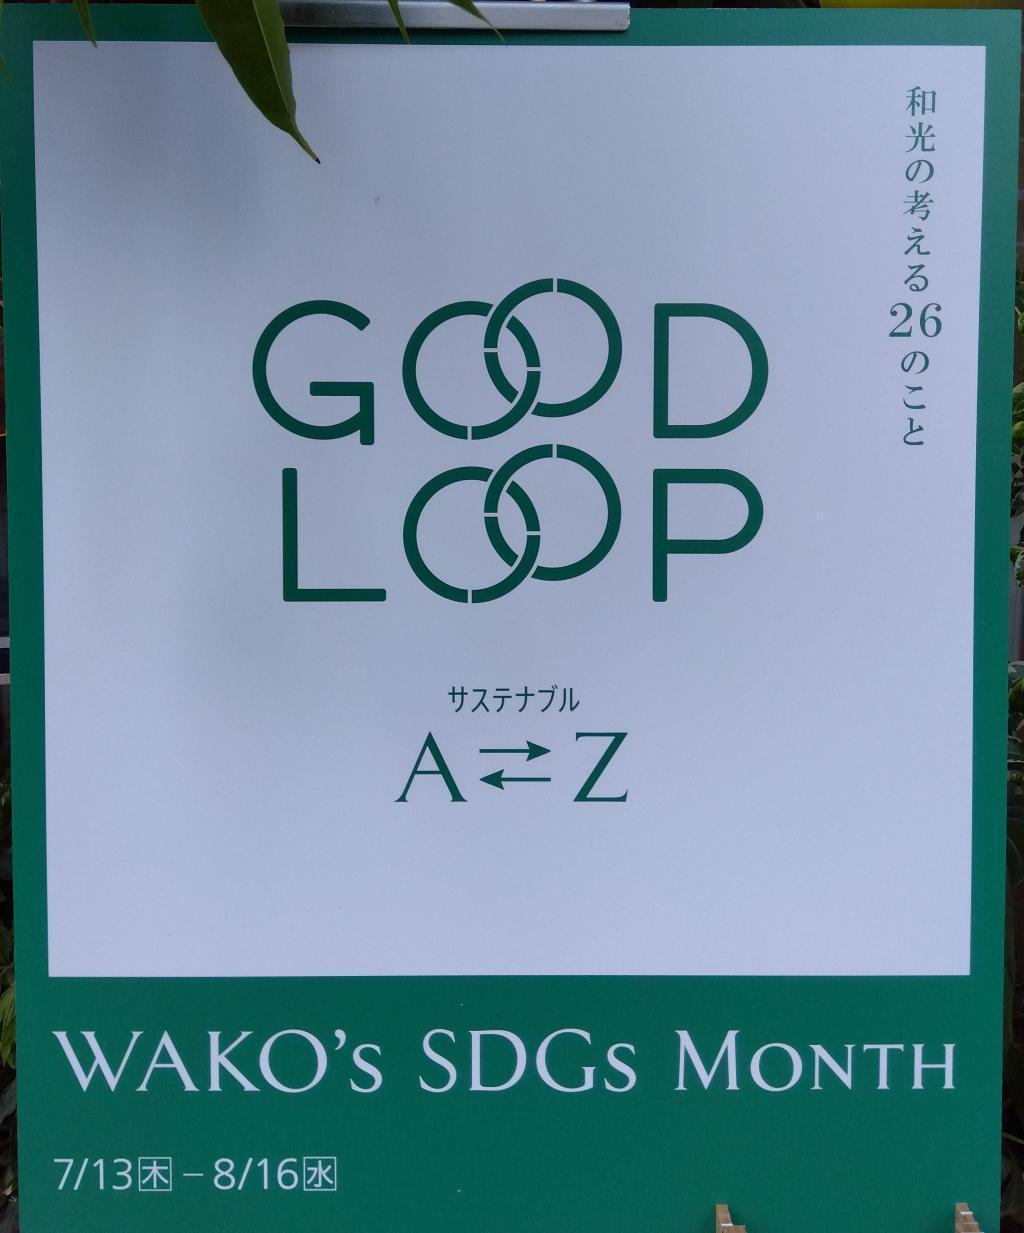 GOOD LOOP  A ⇄Z WAKO'S SDGs Month  和光の考える２６のこと　WAKO'S SDGs MONTH
